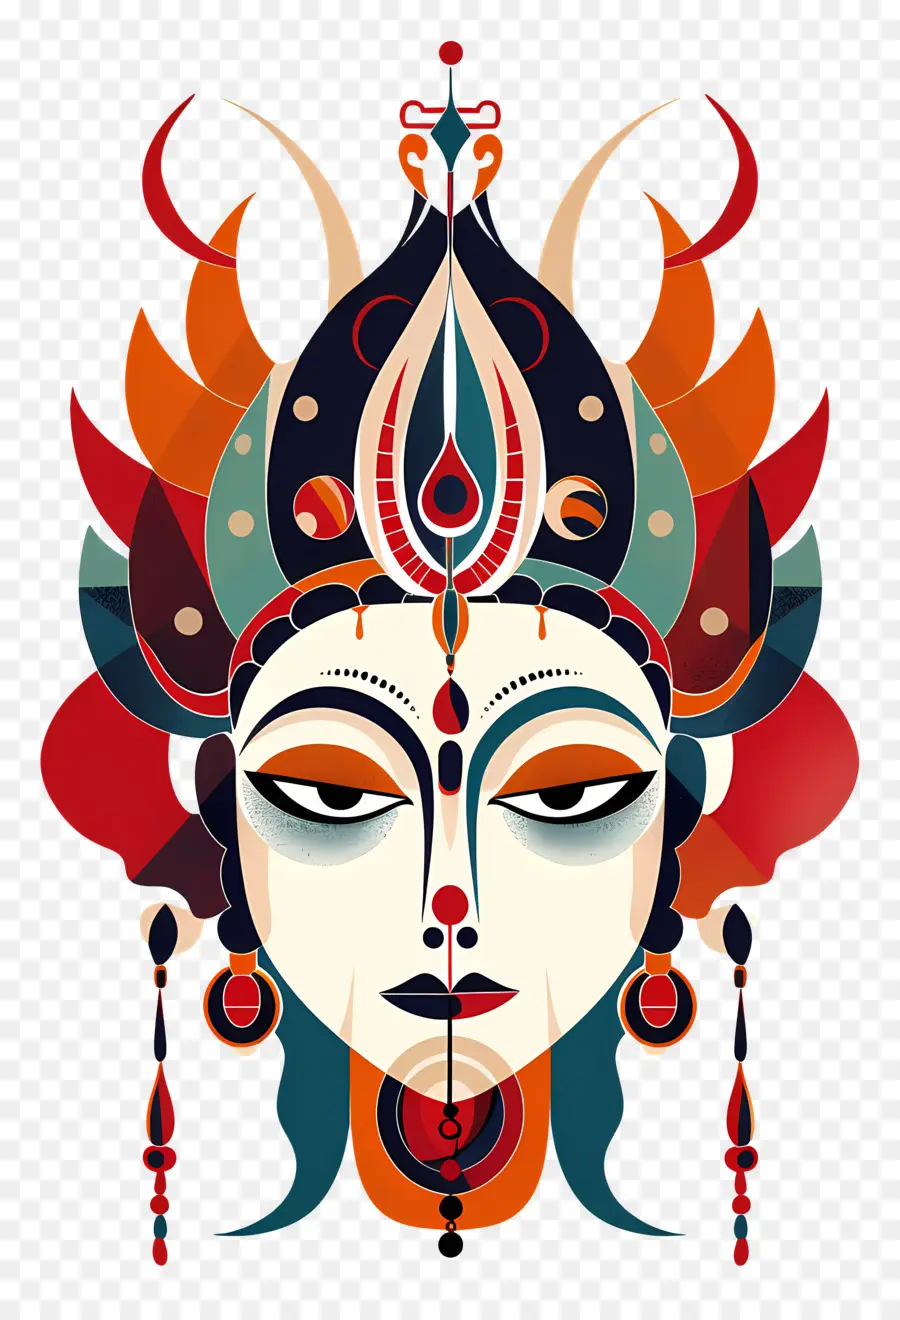 maa chandraghanta hindu goddess ornate headdress intricate details black and white eyes